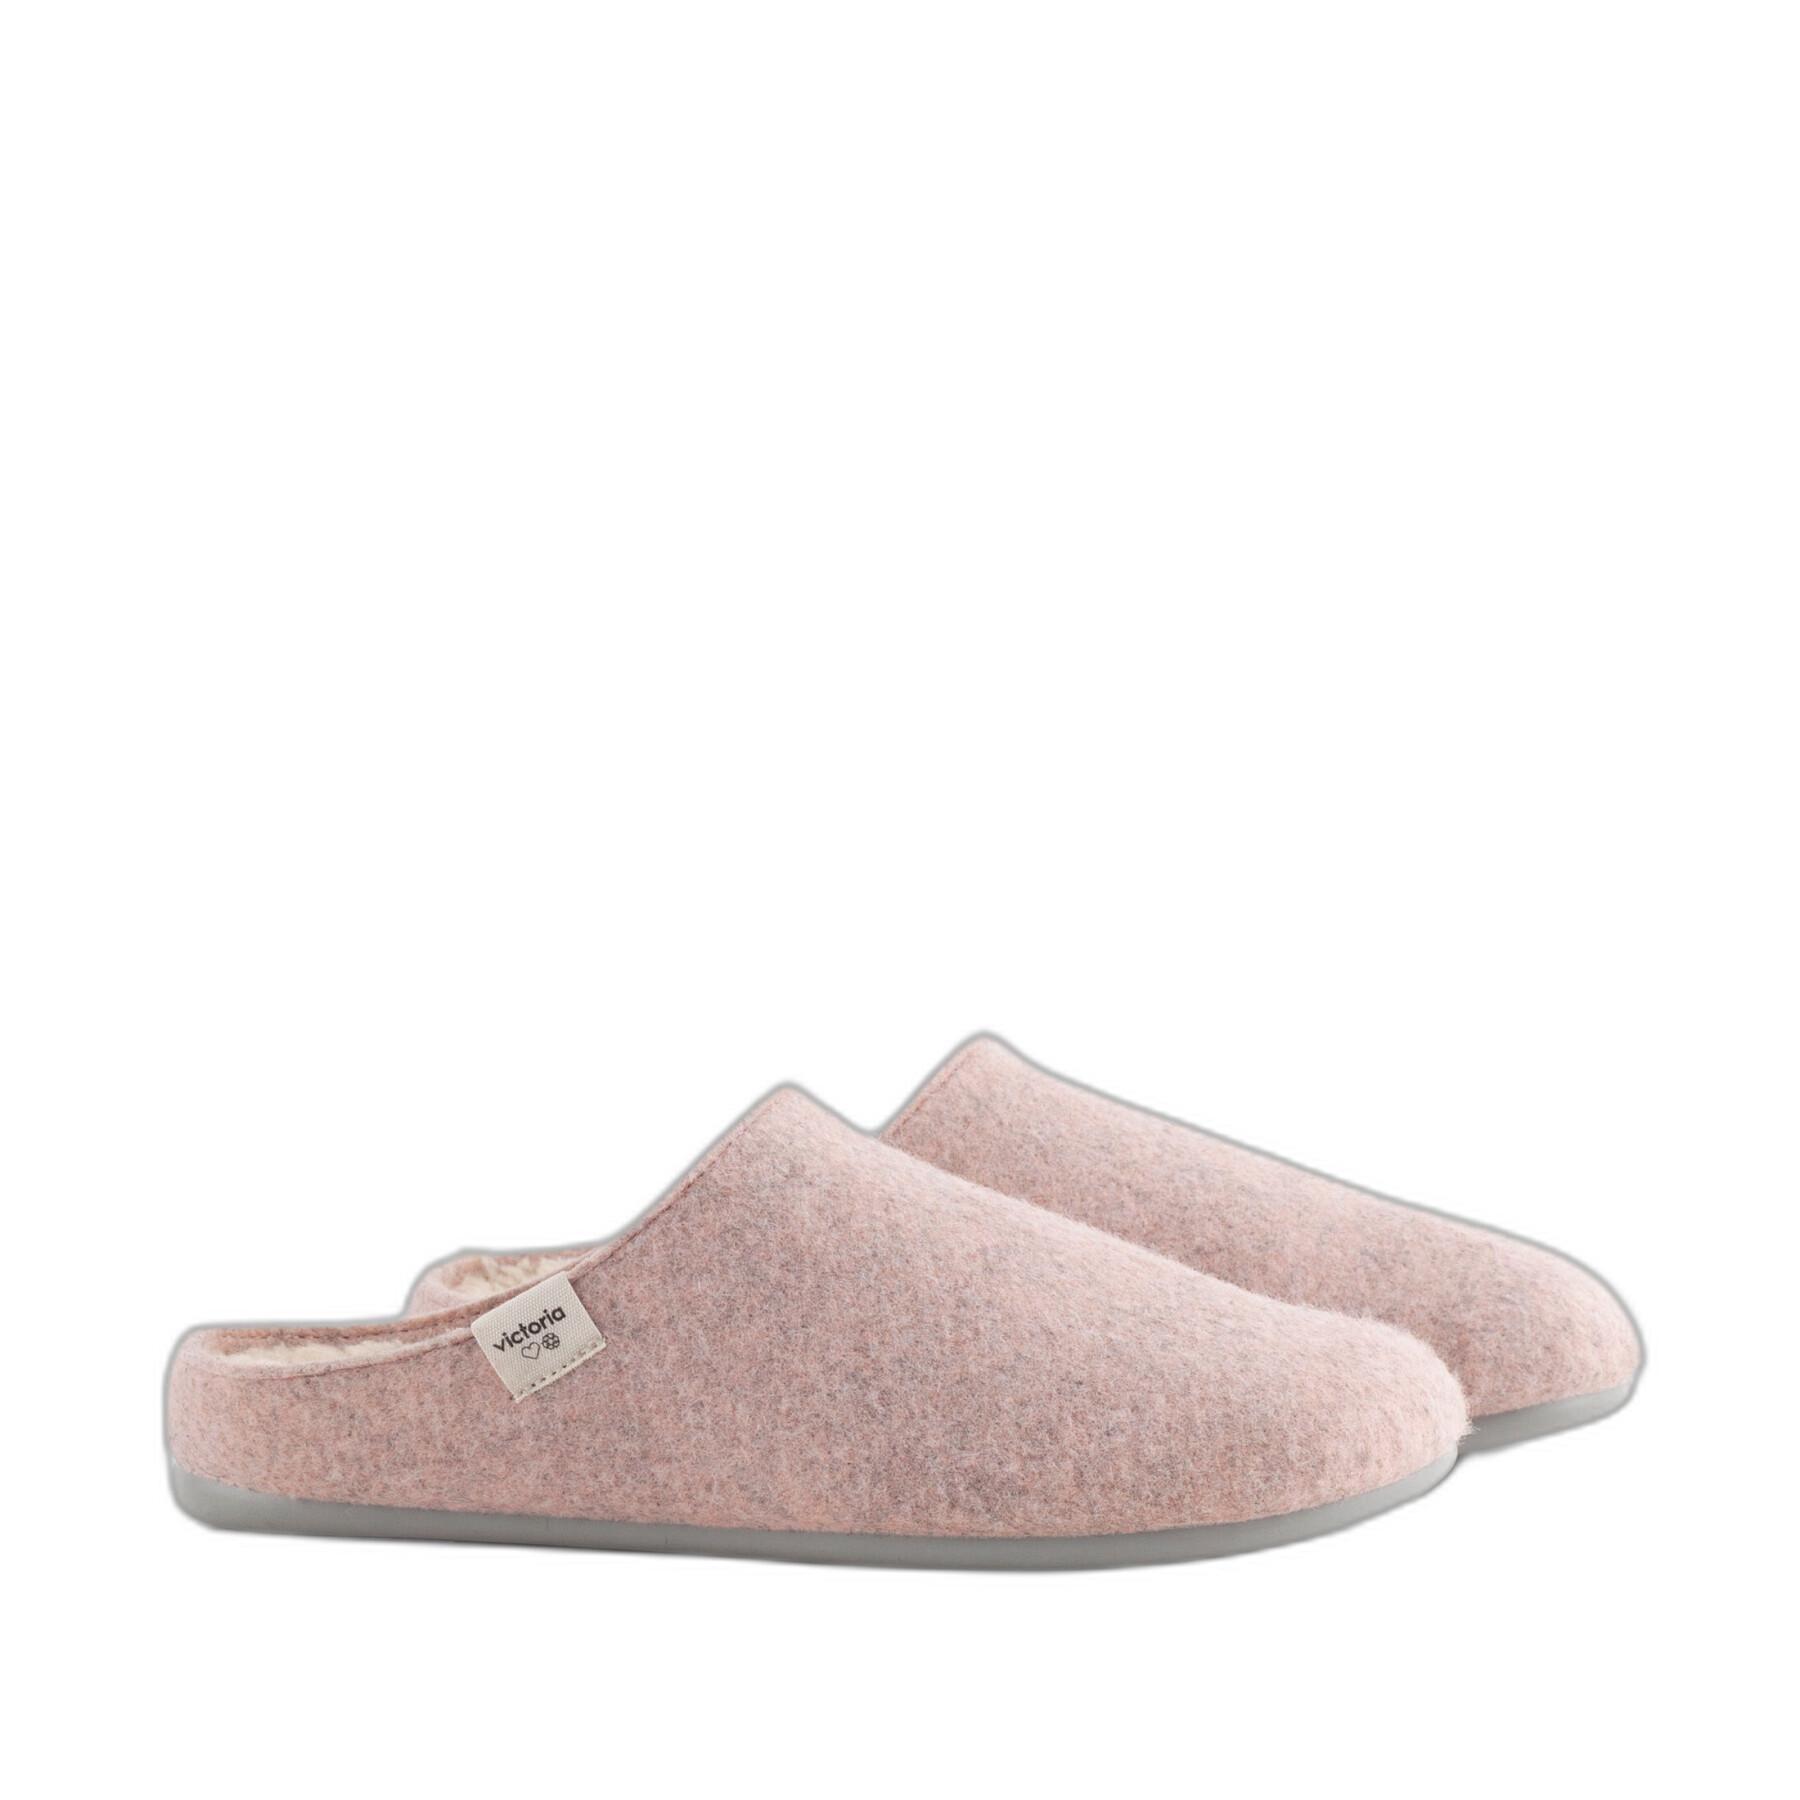 Women's slippers Victoria Norte